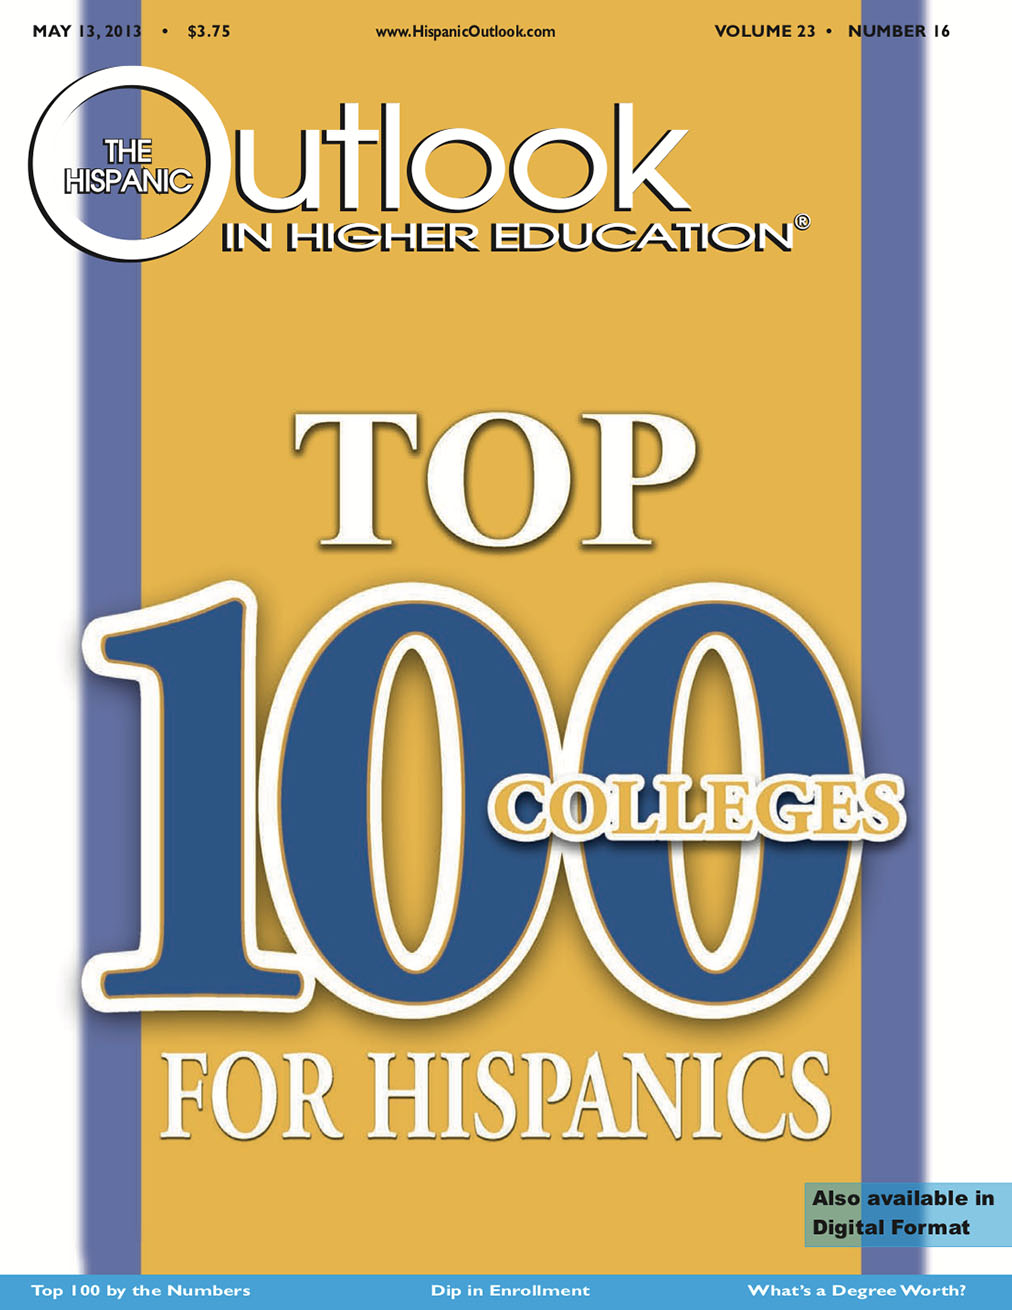 Top 100 Colleges for HIspanics 2013